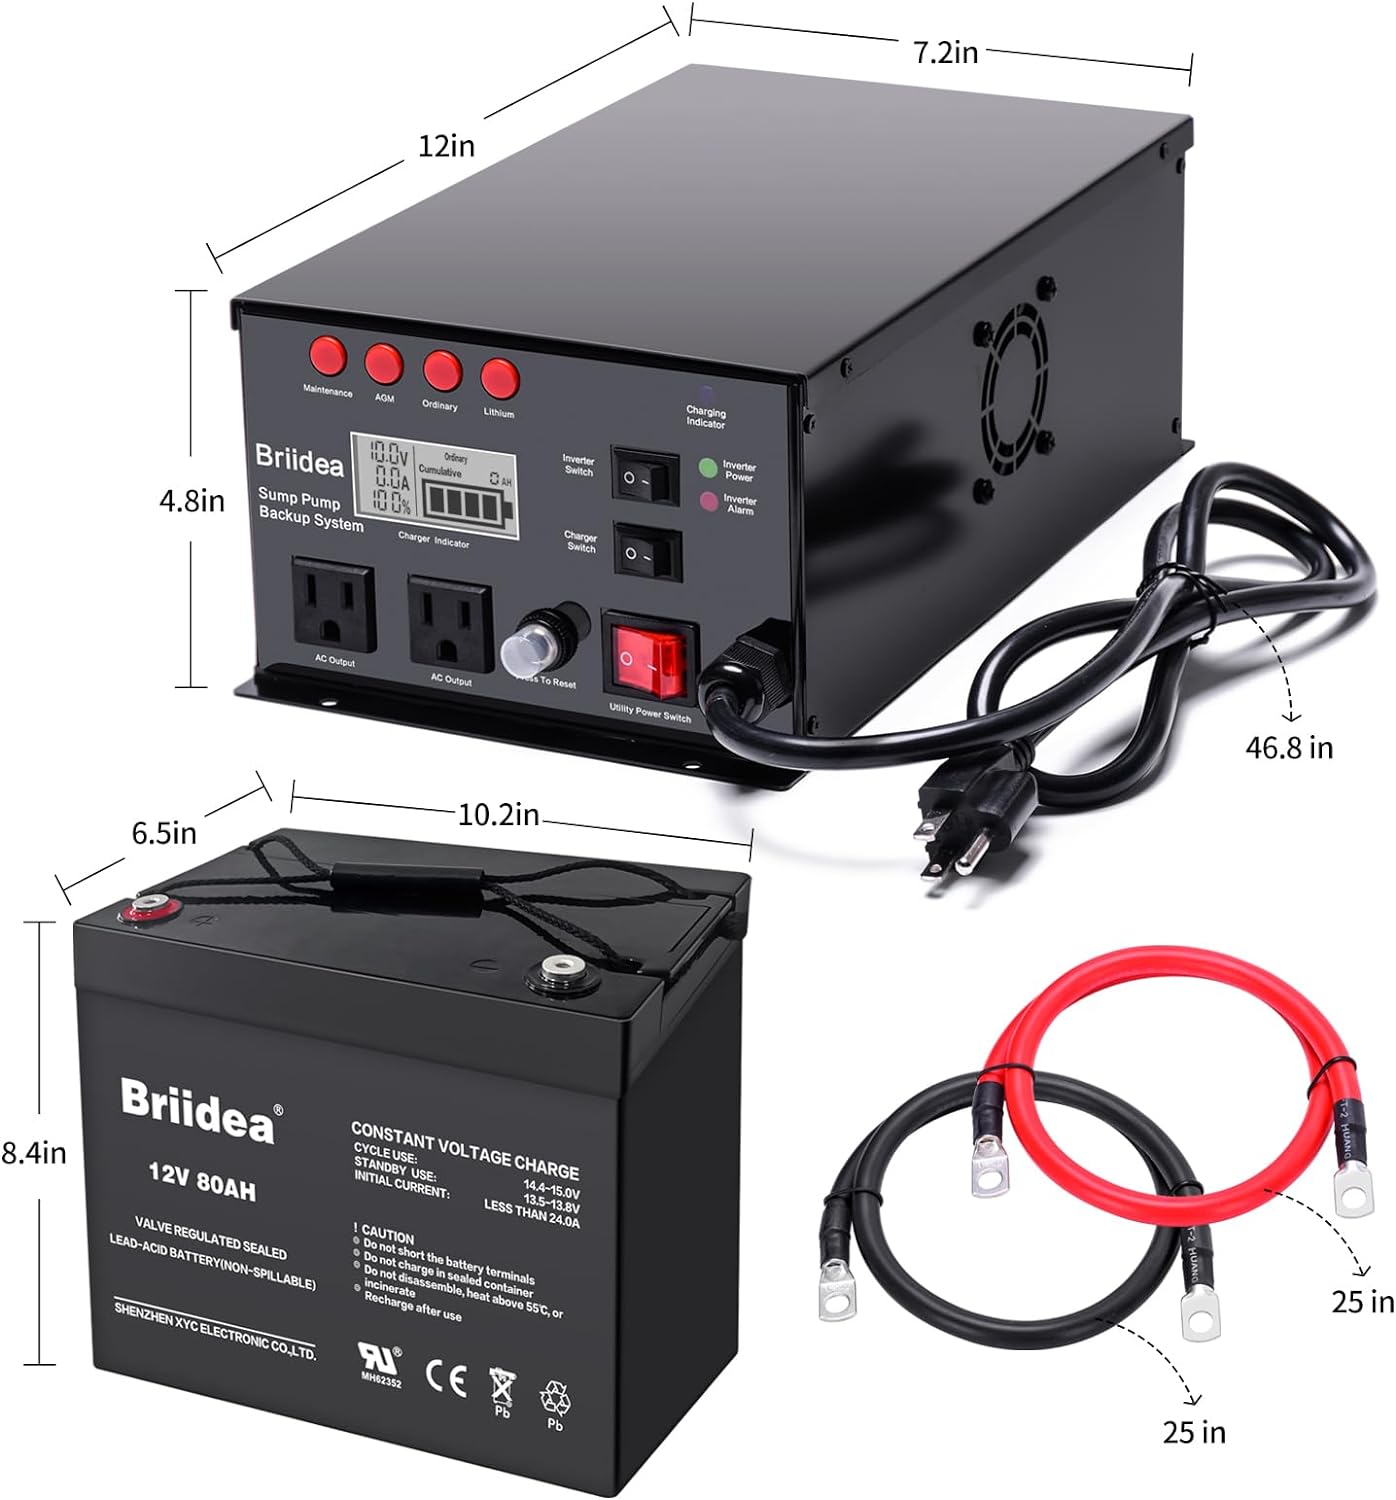 Briidea 1500W Sump Pump Battery Backup System with 12V 80AH Lead-acid Battery